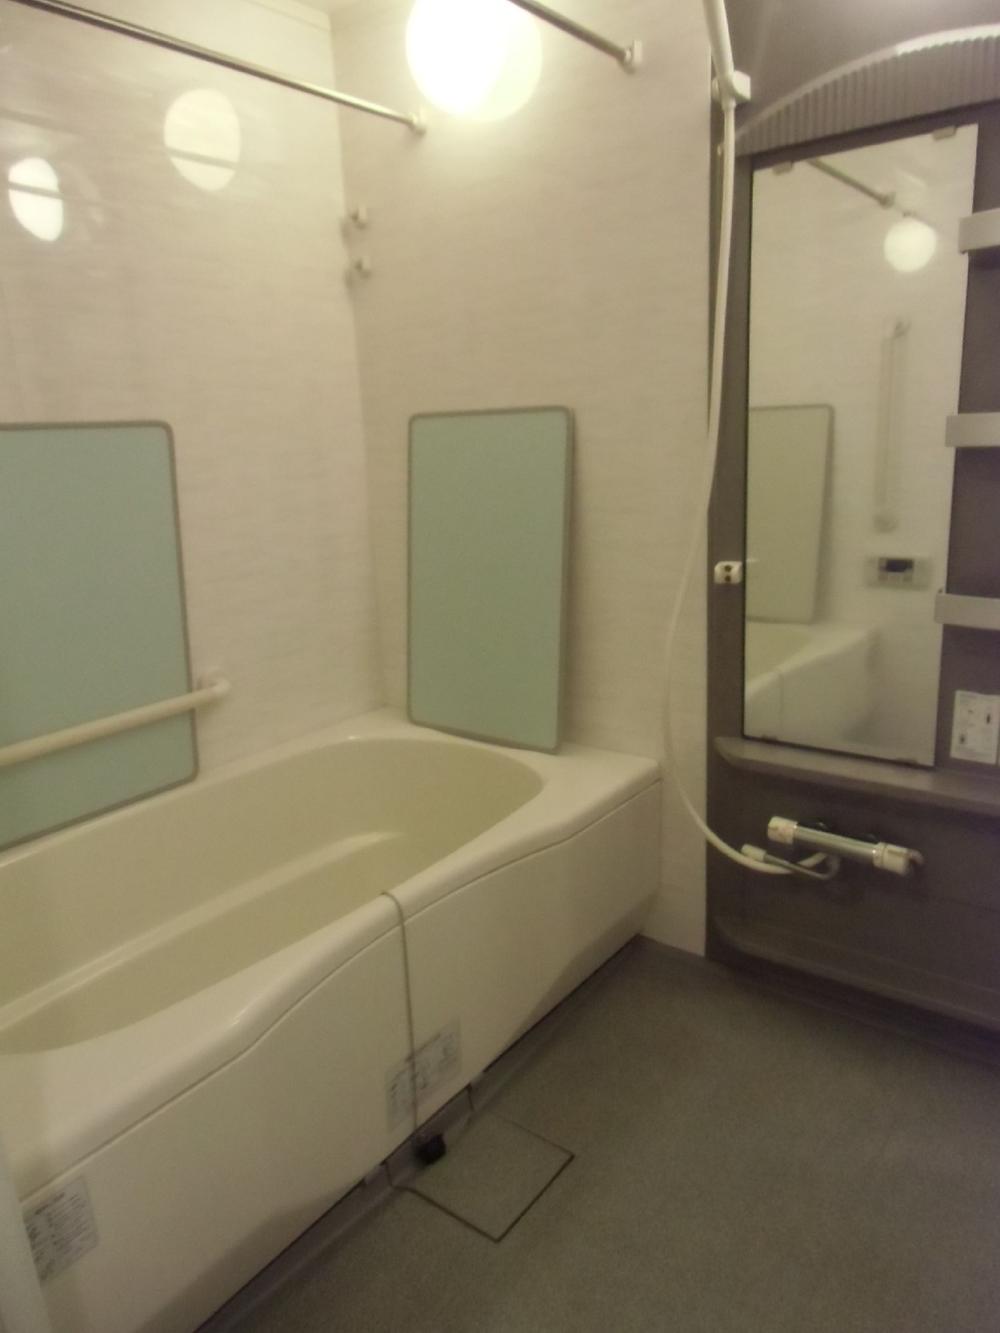 Bathroom. It is with a bathroom ventilation dryer (November 2013) Shooting